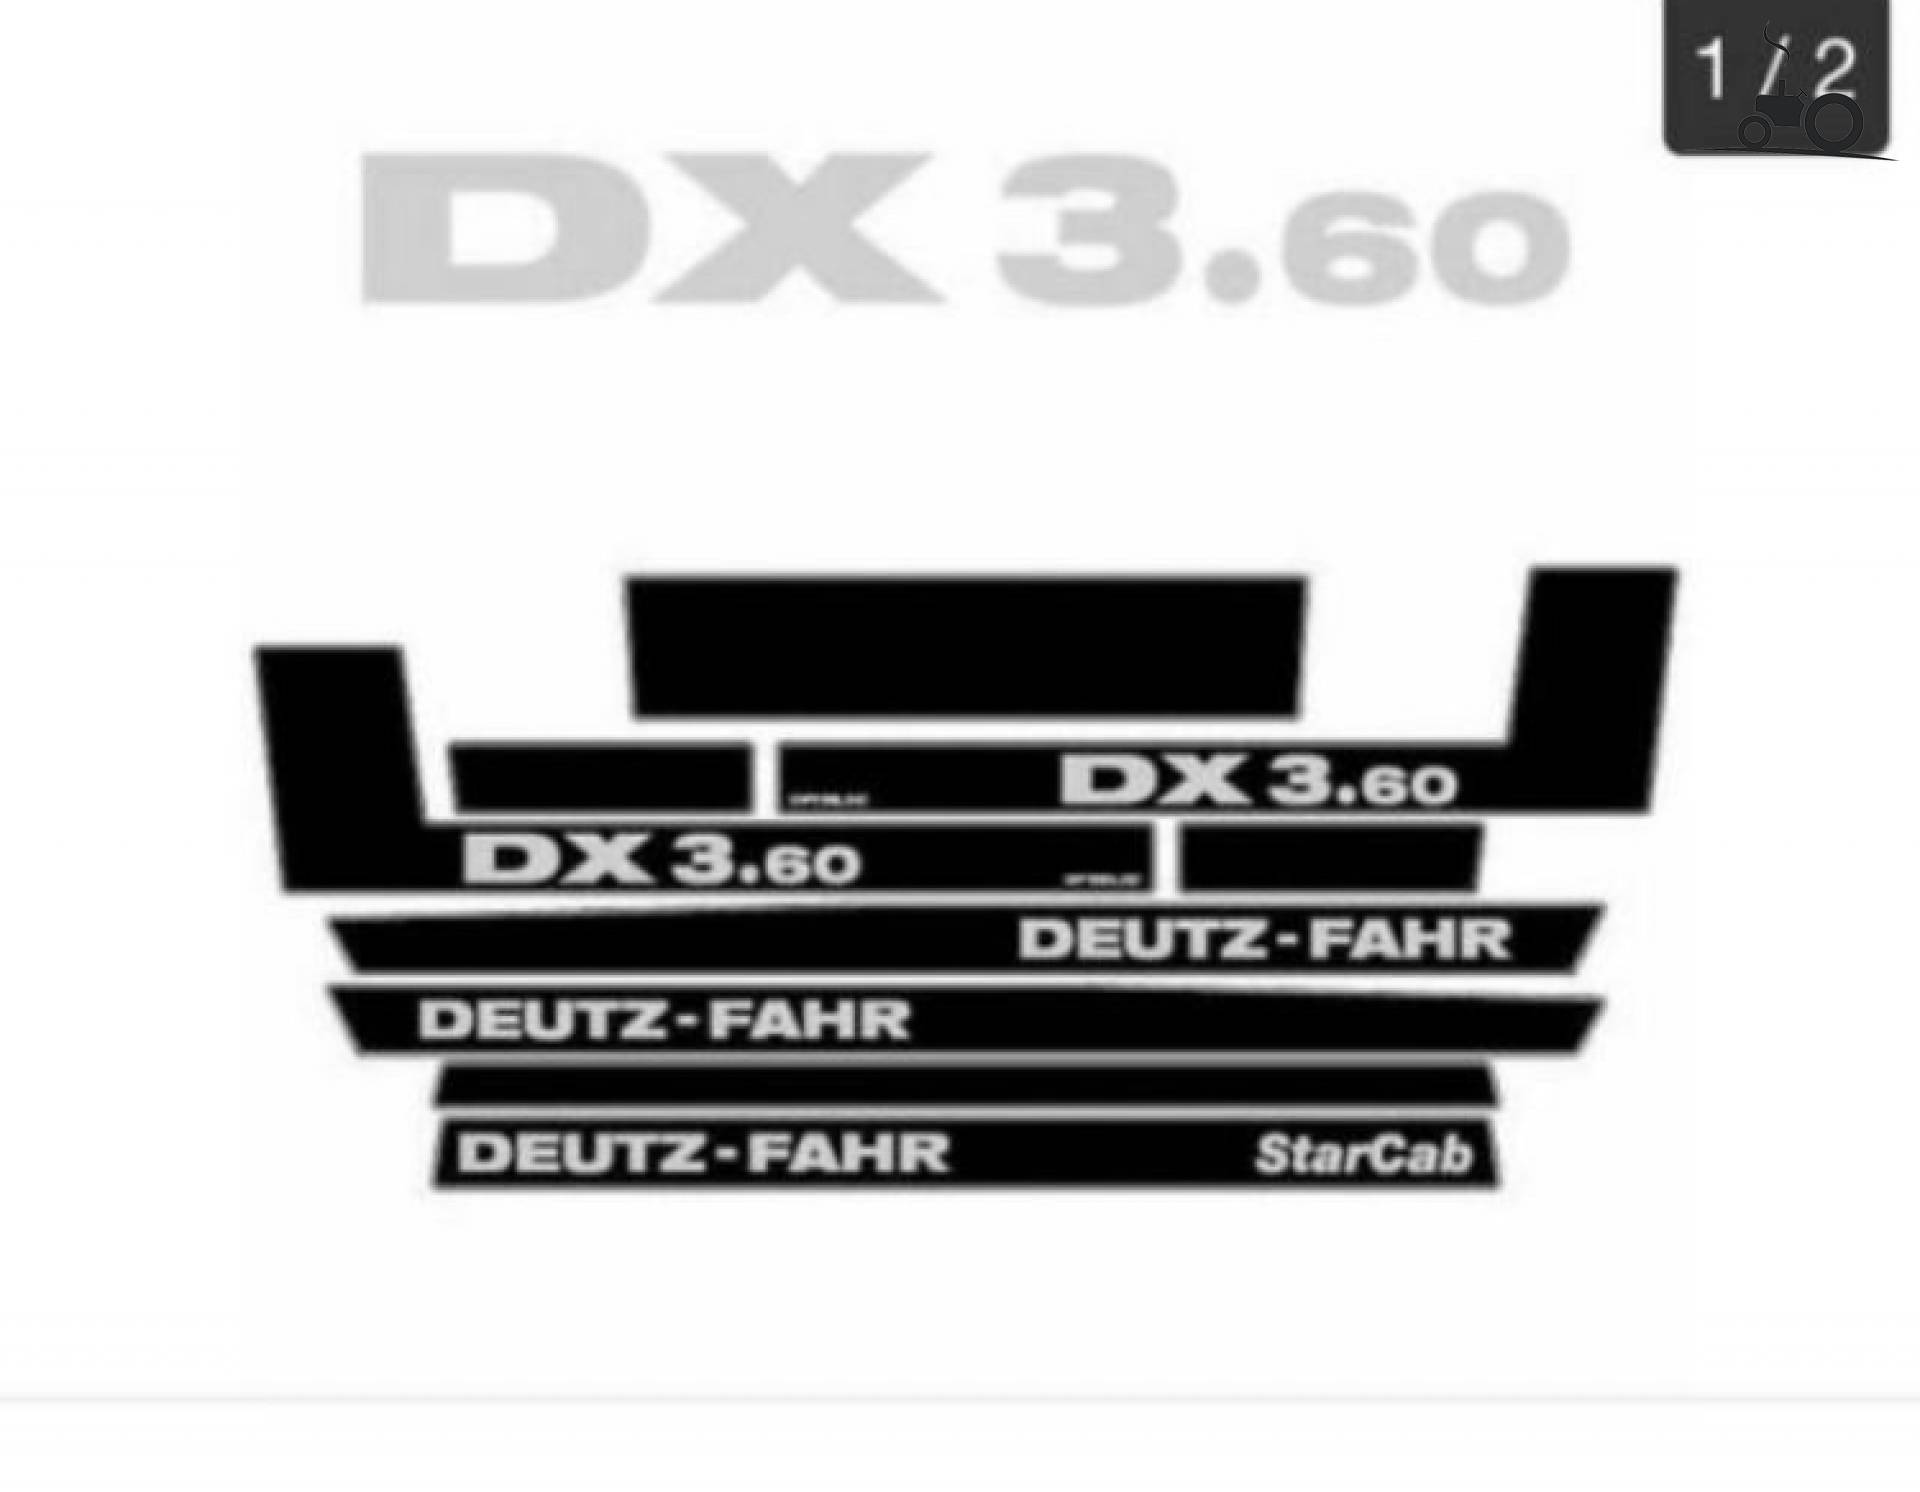 Deutz-Fahr DX 3.60